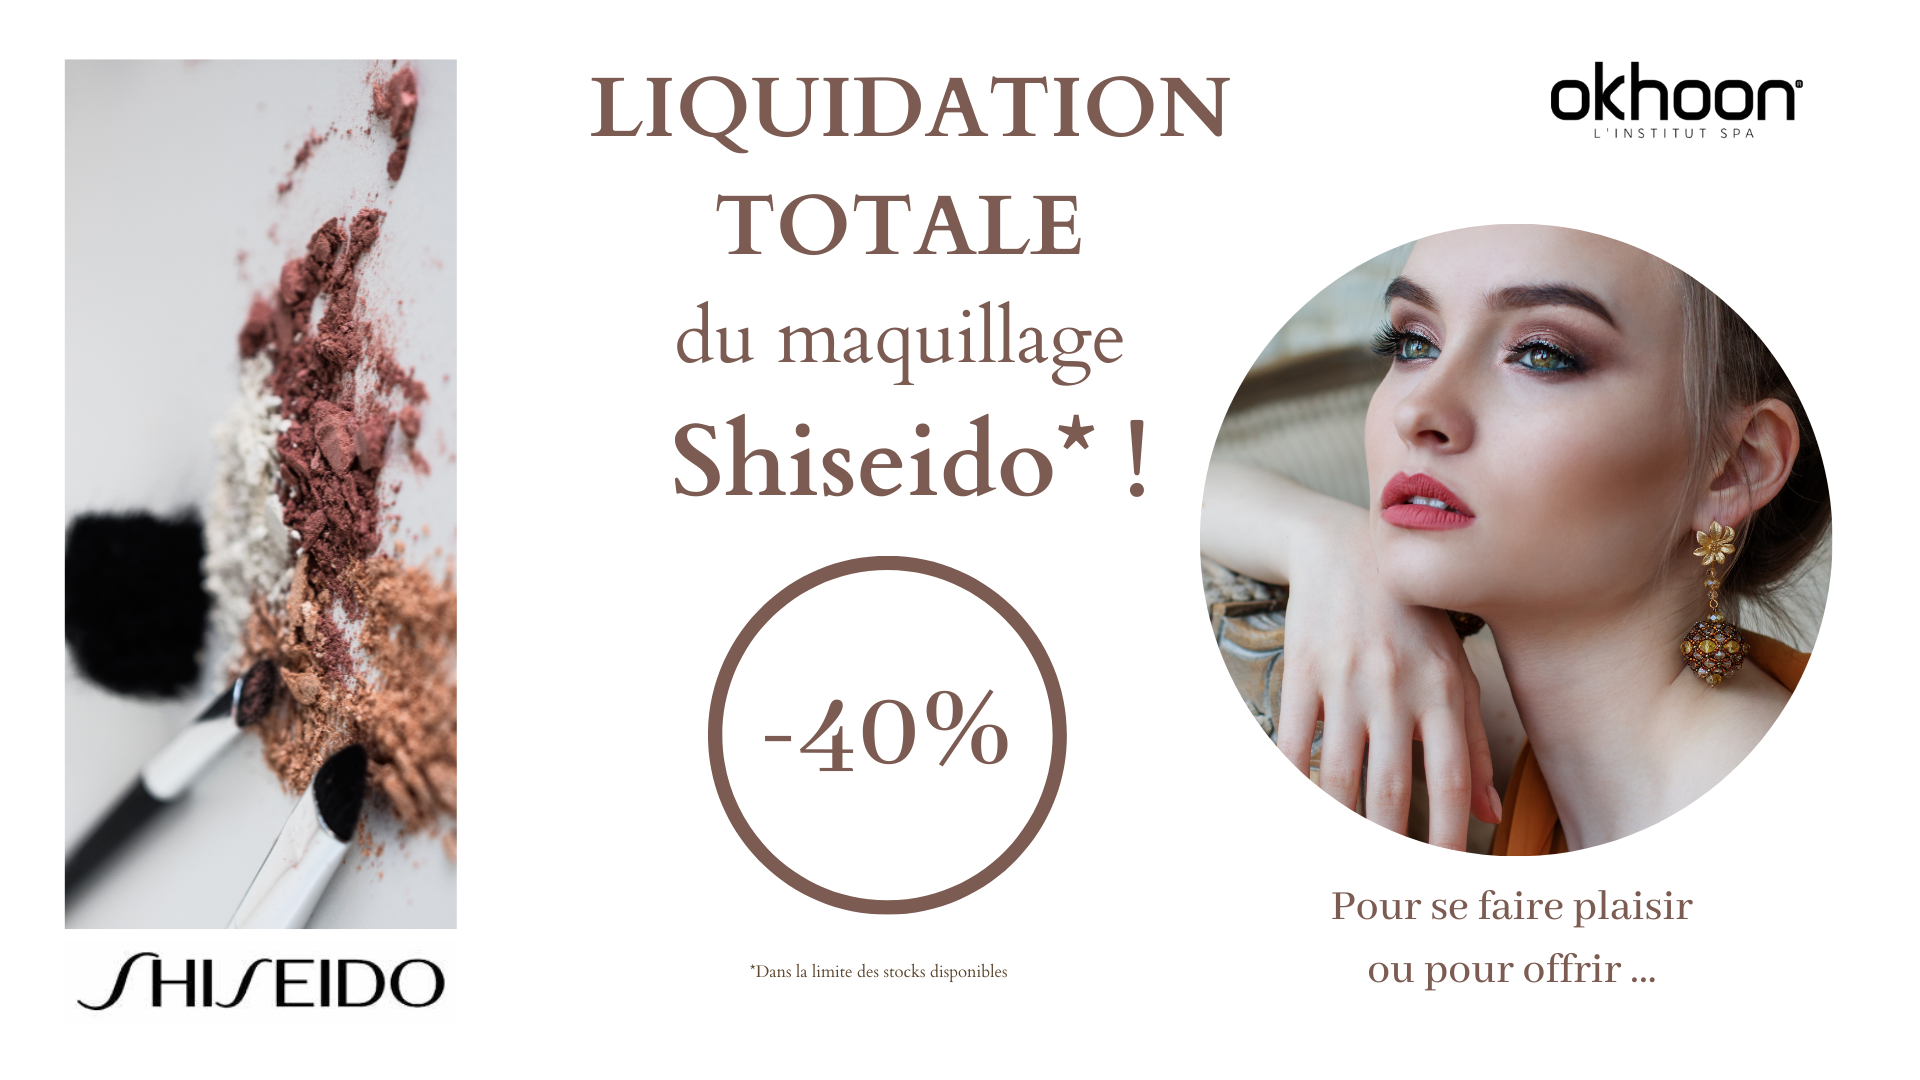 shiseido liquidation maquillage okhoon langueux